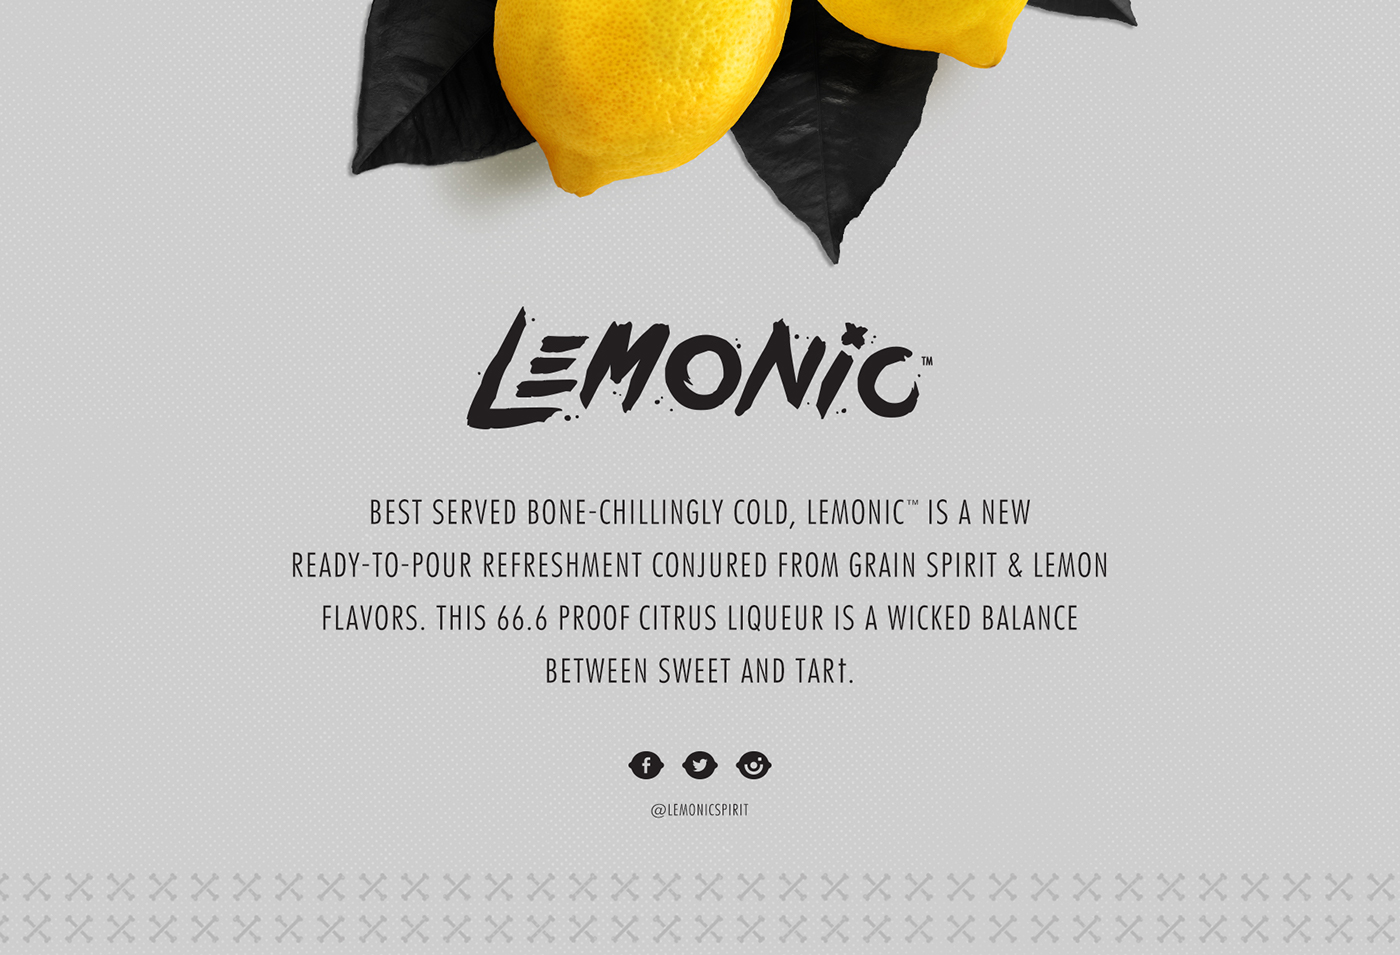 Lemonic lemon spirit alcohol devilish mobile game bottle refreshment citrus liquor social beverage comite drink